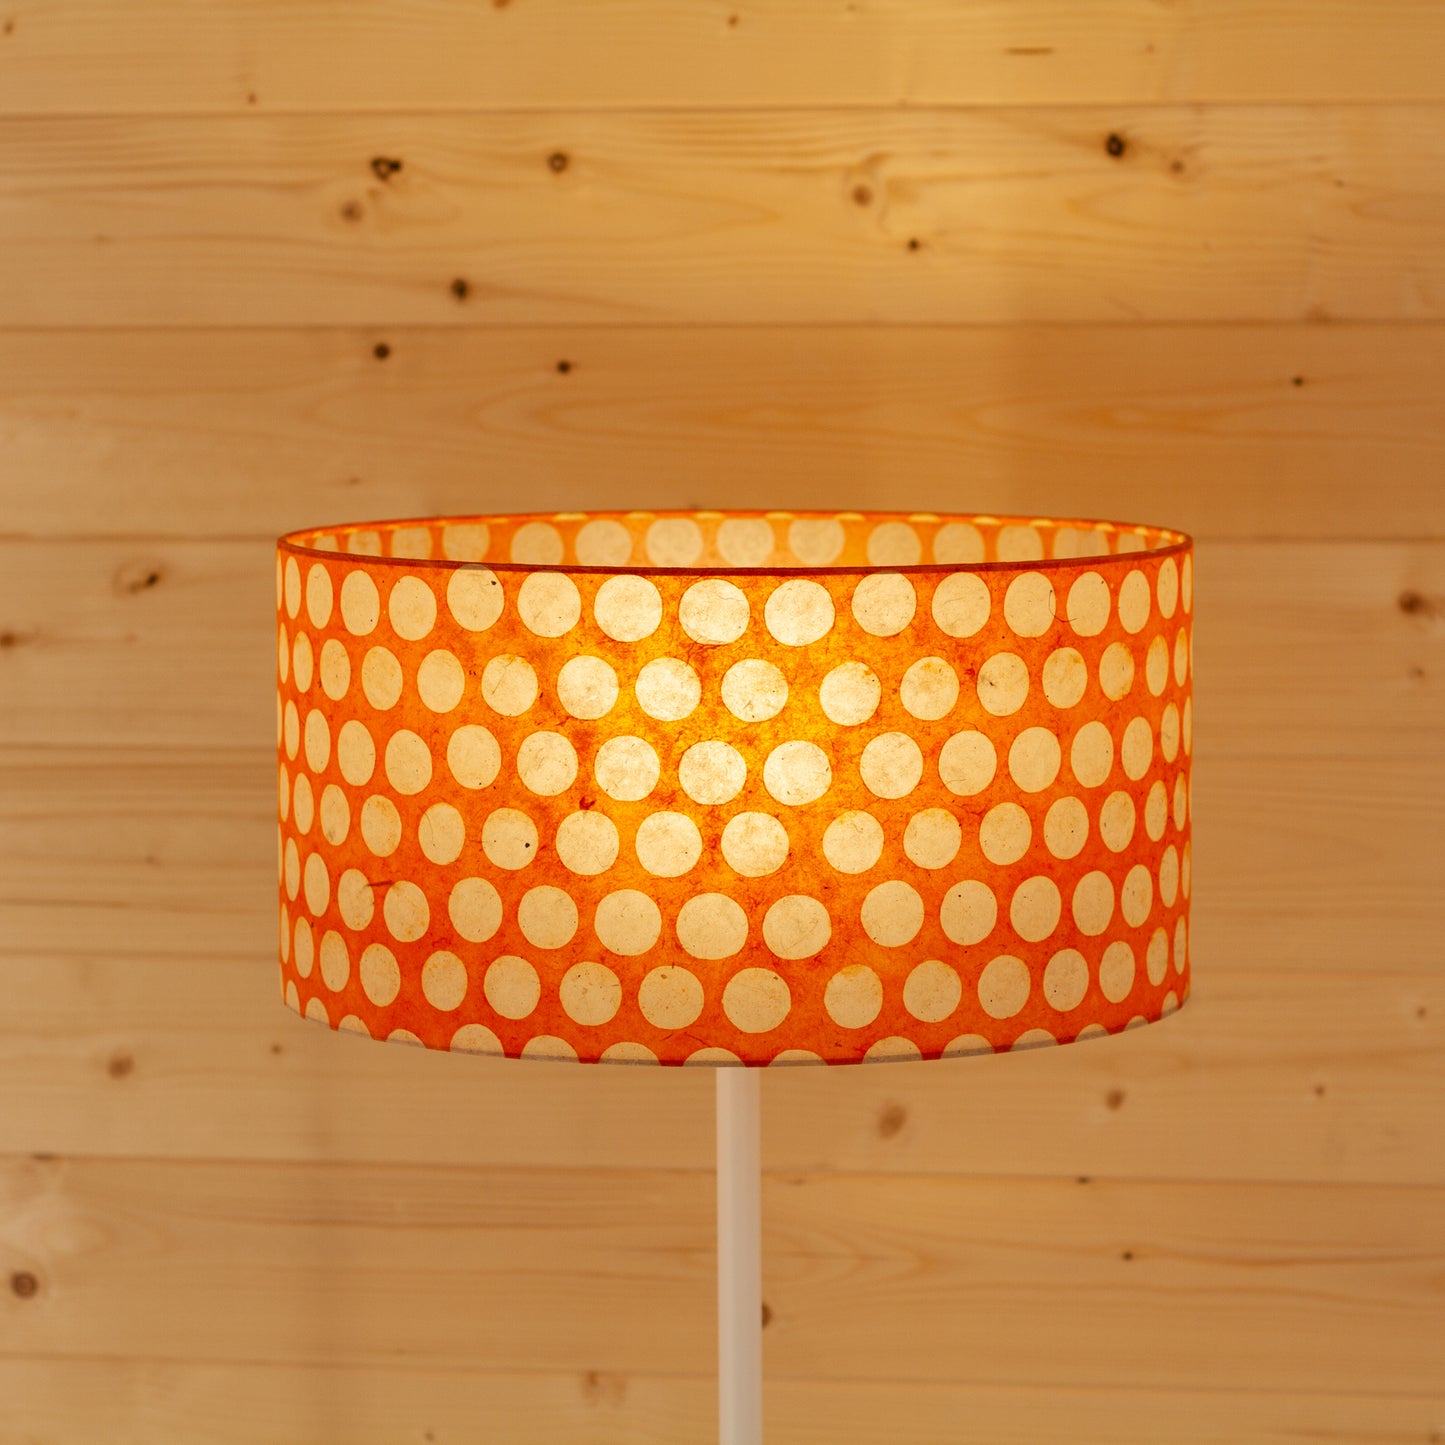 Drum Lamp Shade - B110 ~ Batik Dots on Orange, 40cm(d) x 20cm(h)